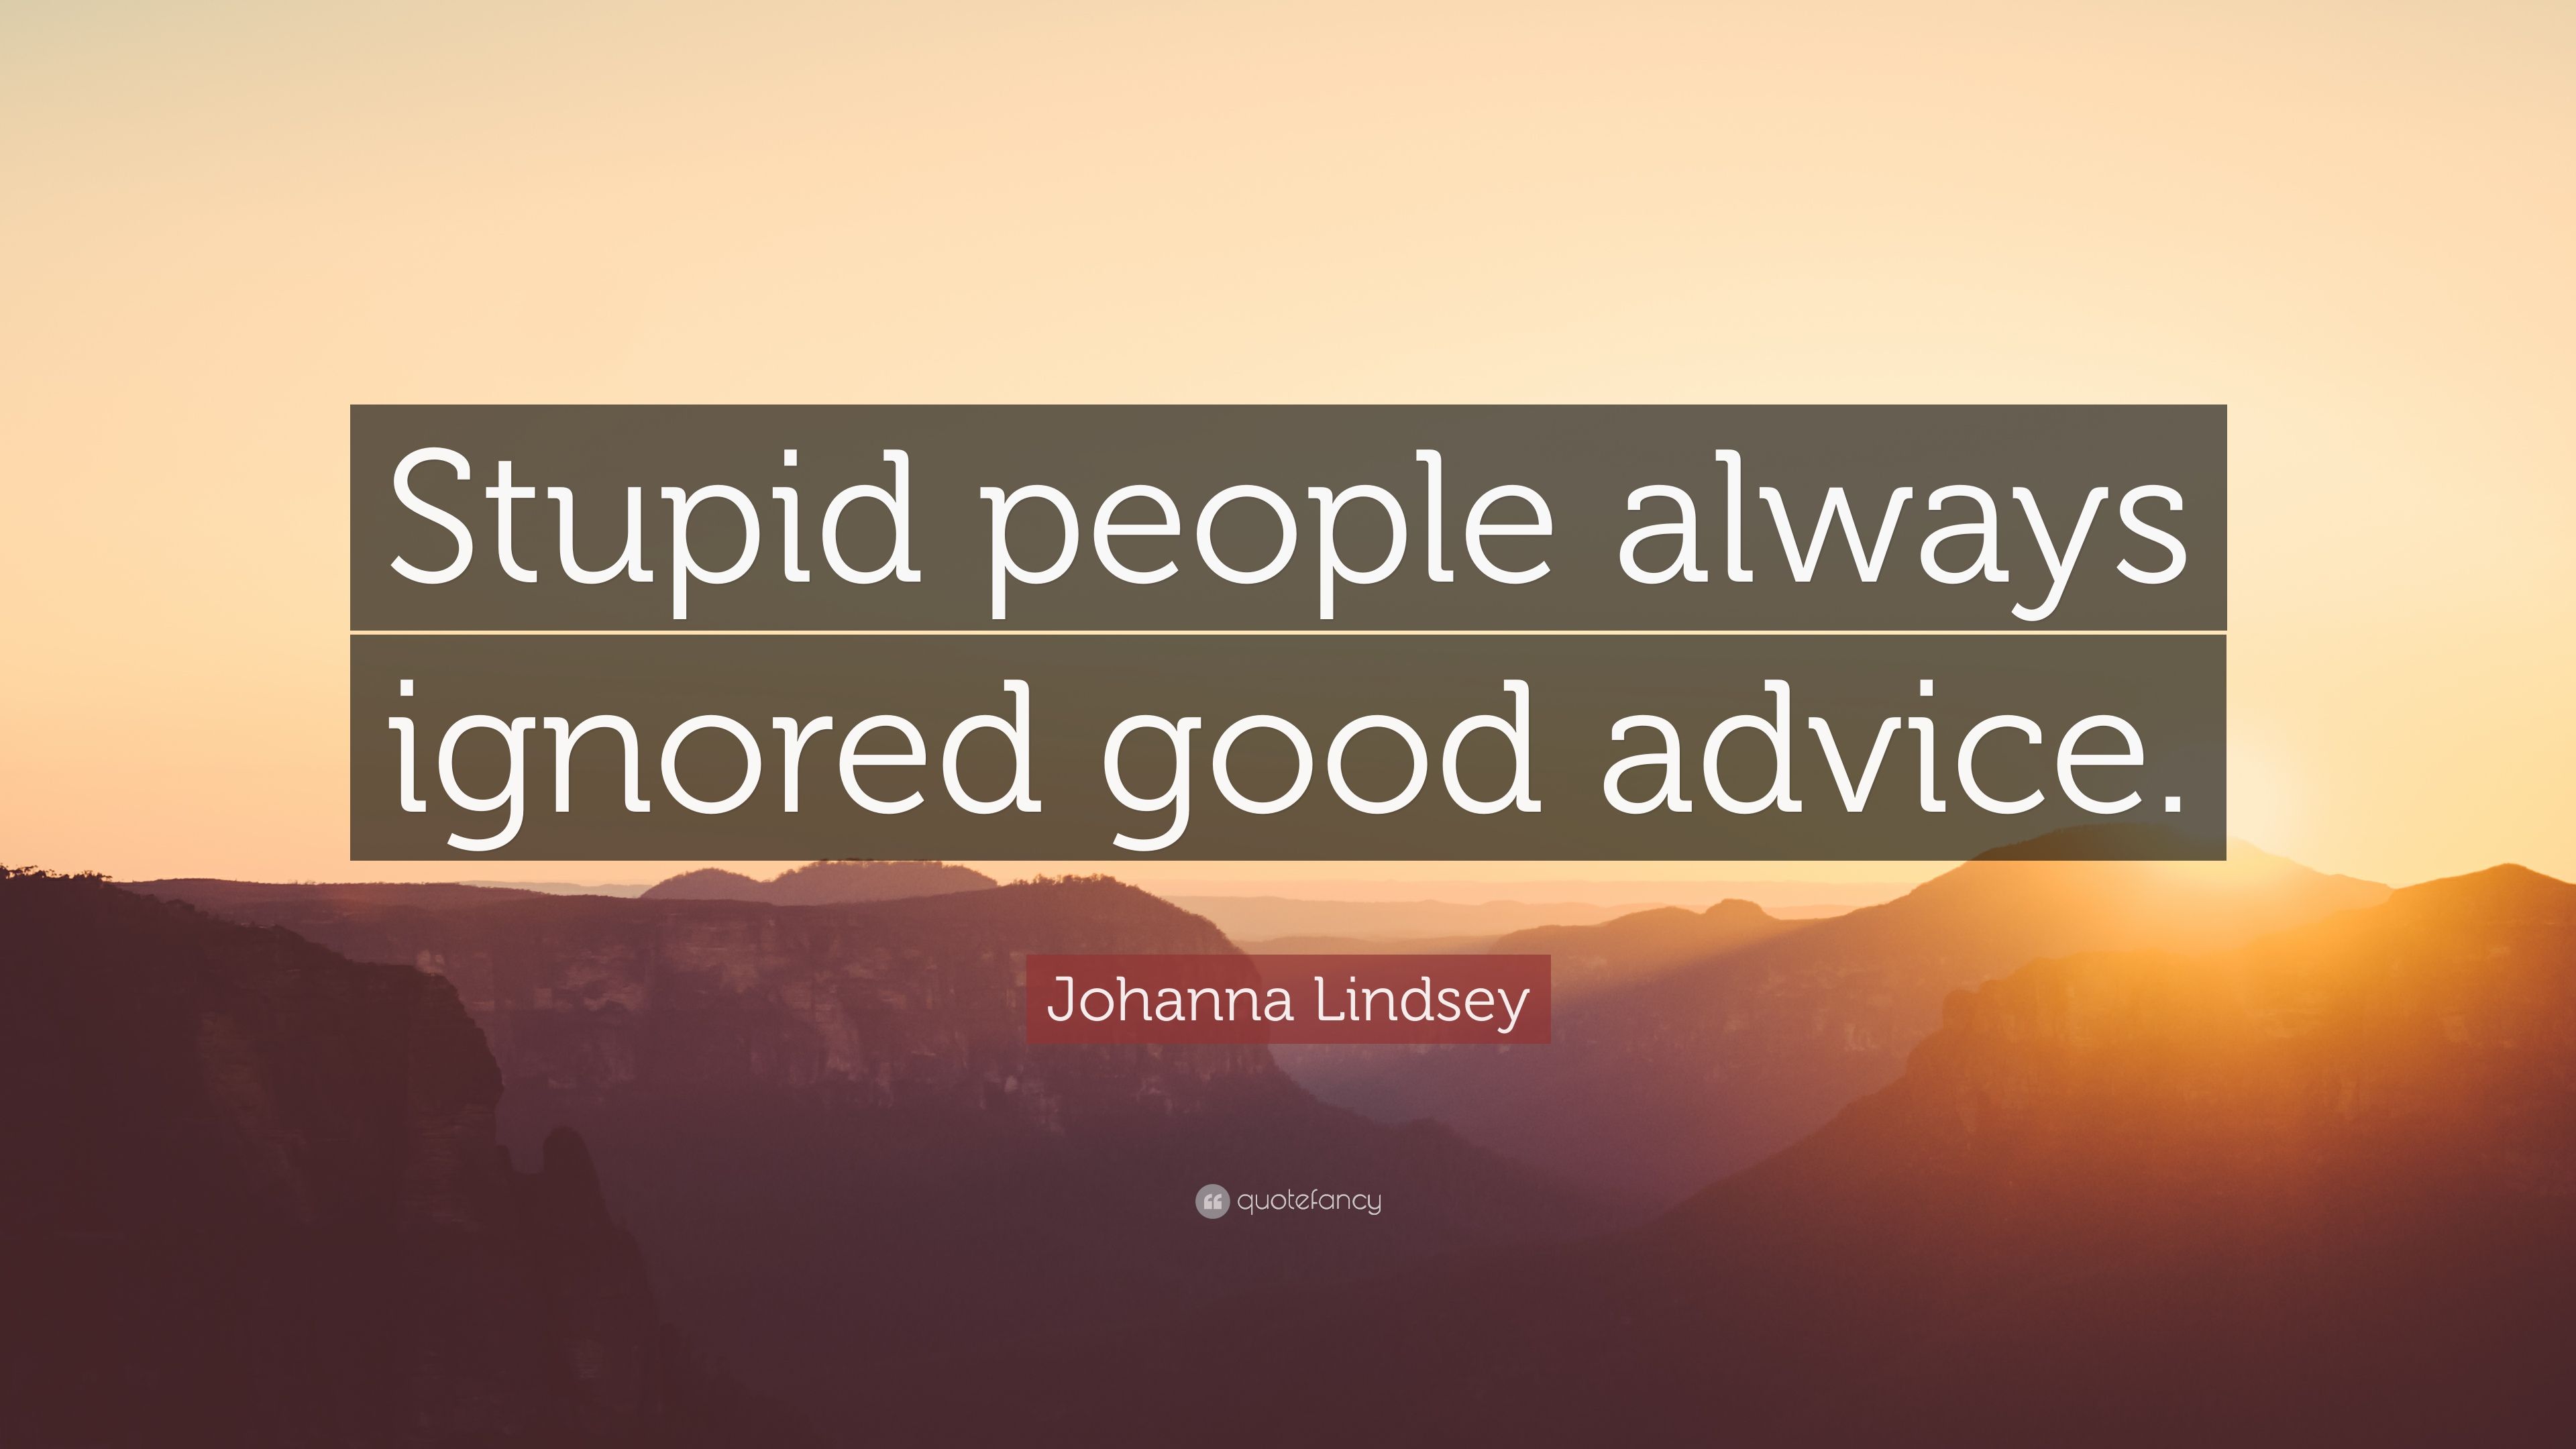 Johanna Lindsey Quote: “Stupid people always ignored good advice.” (7 wallpaper)